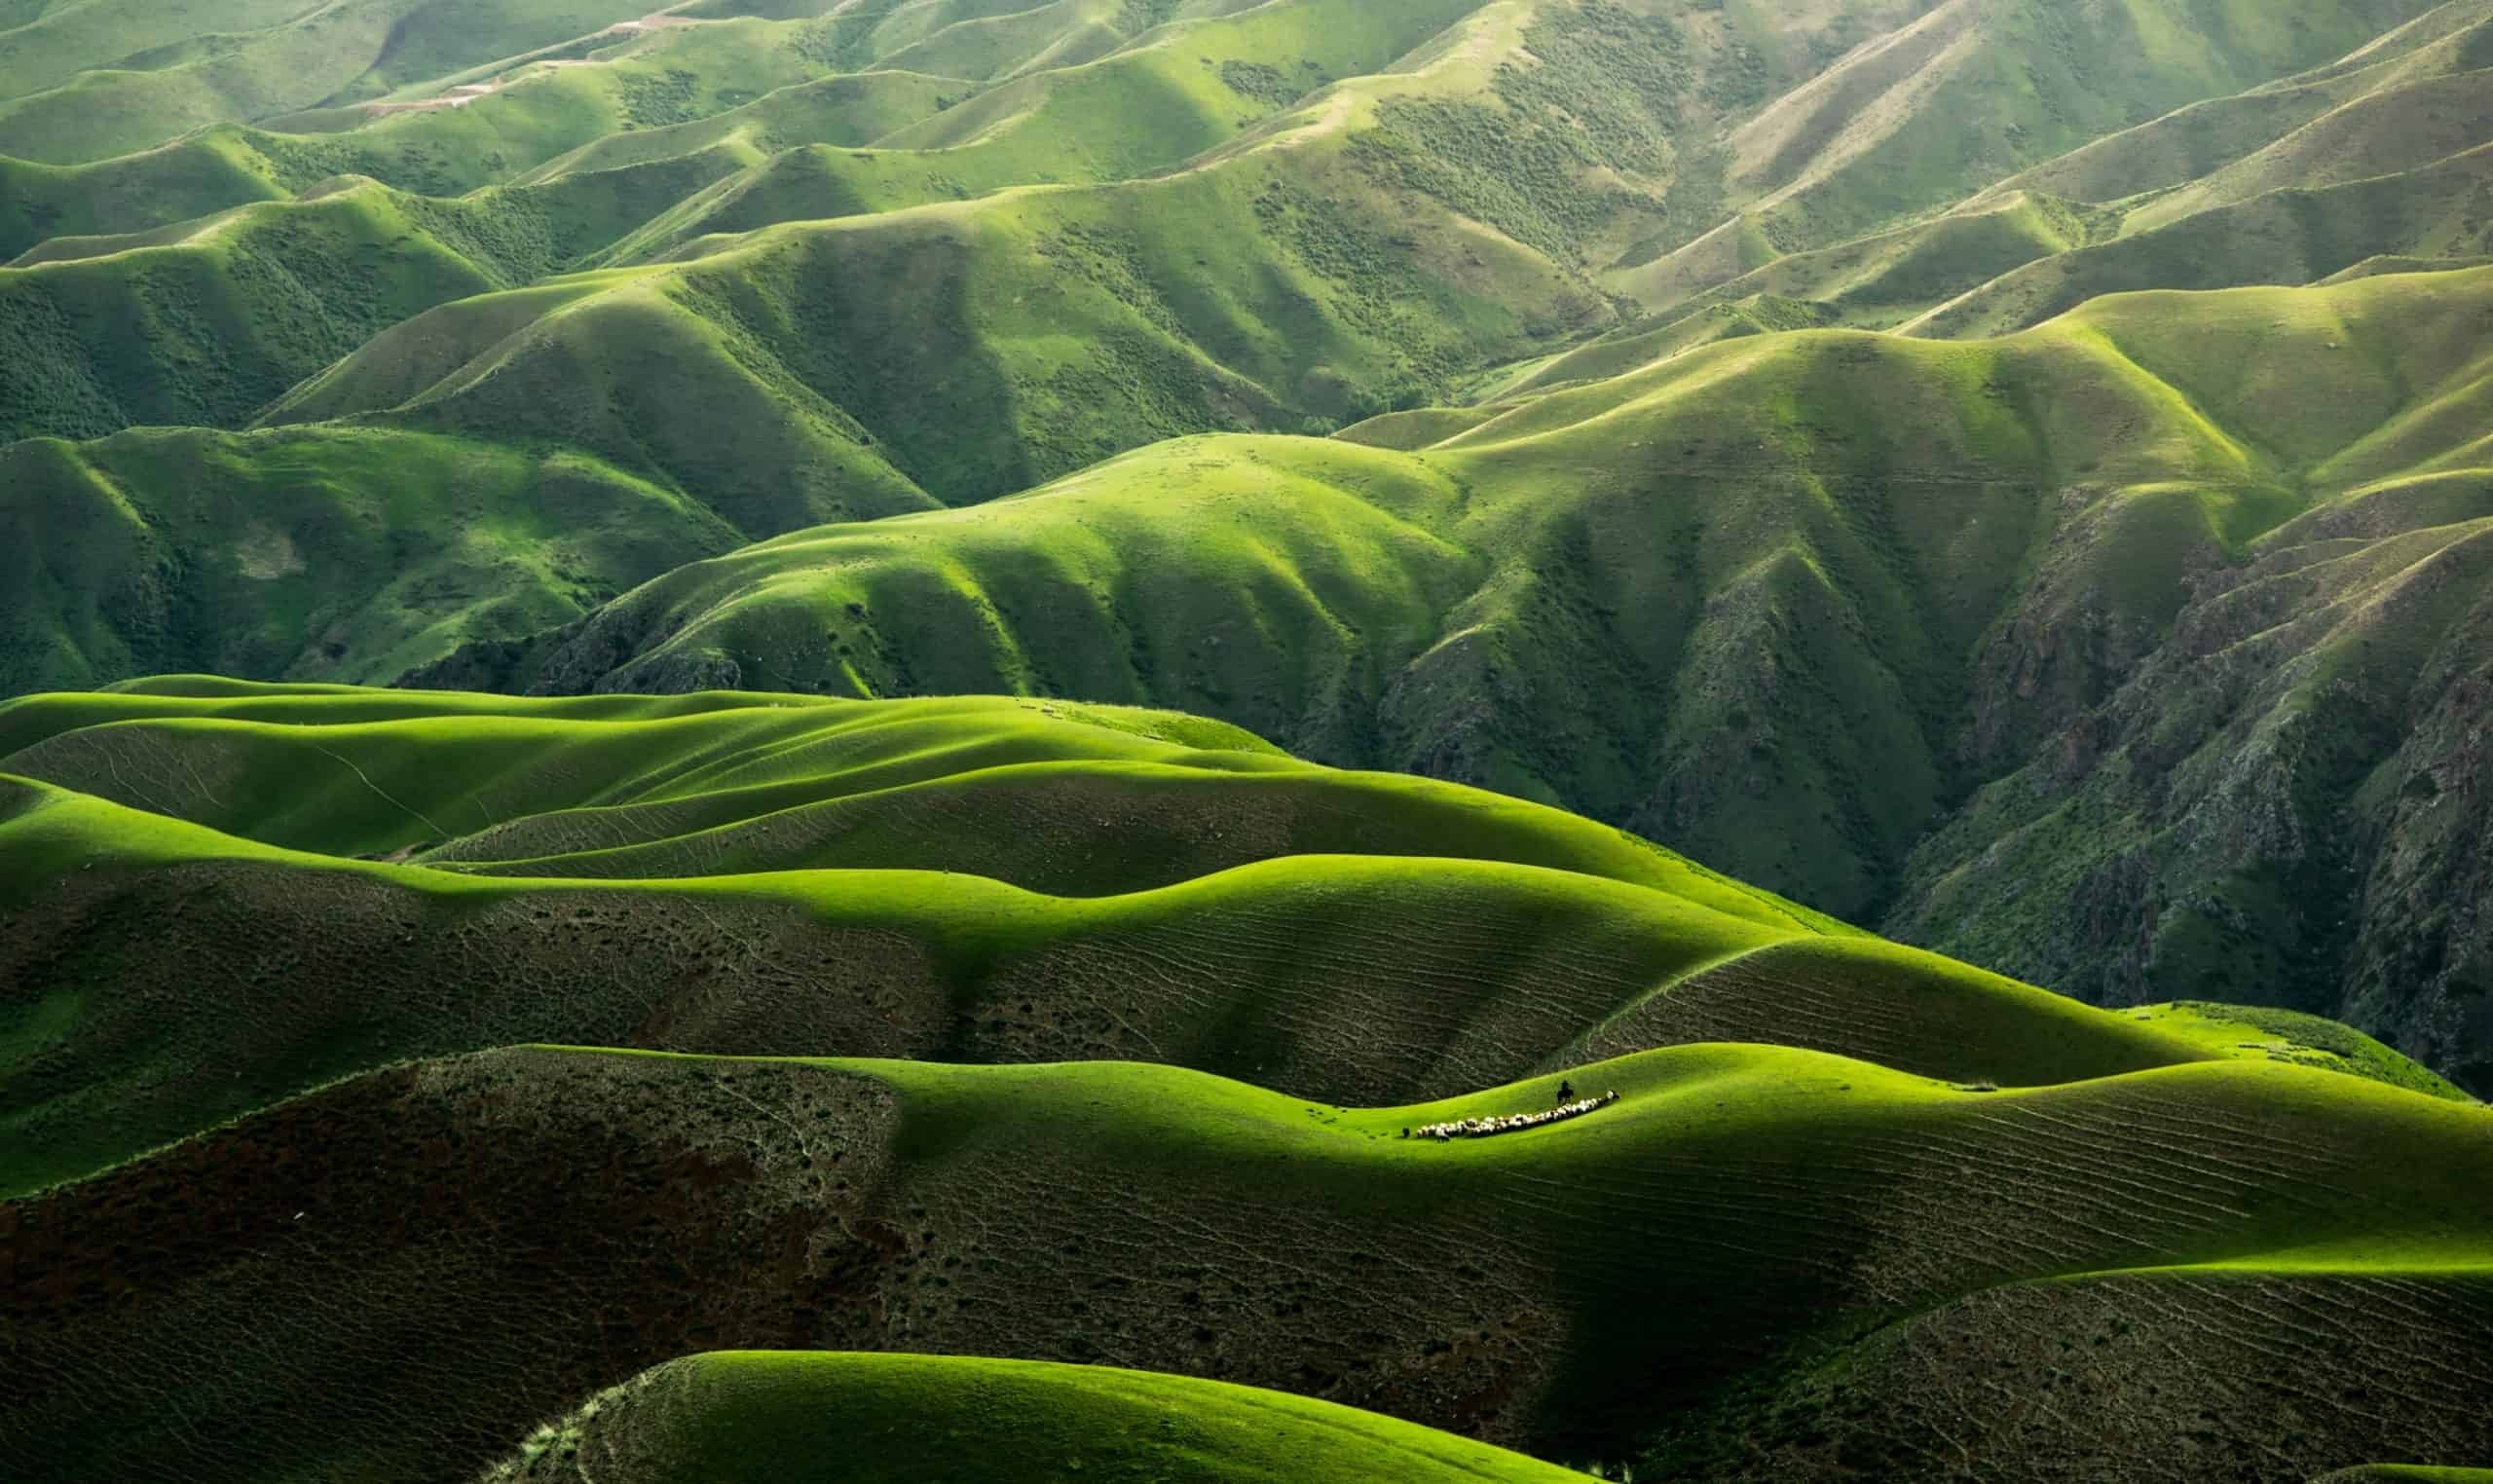 Grassland of China